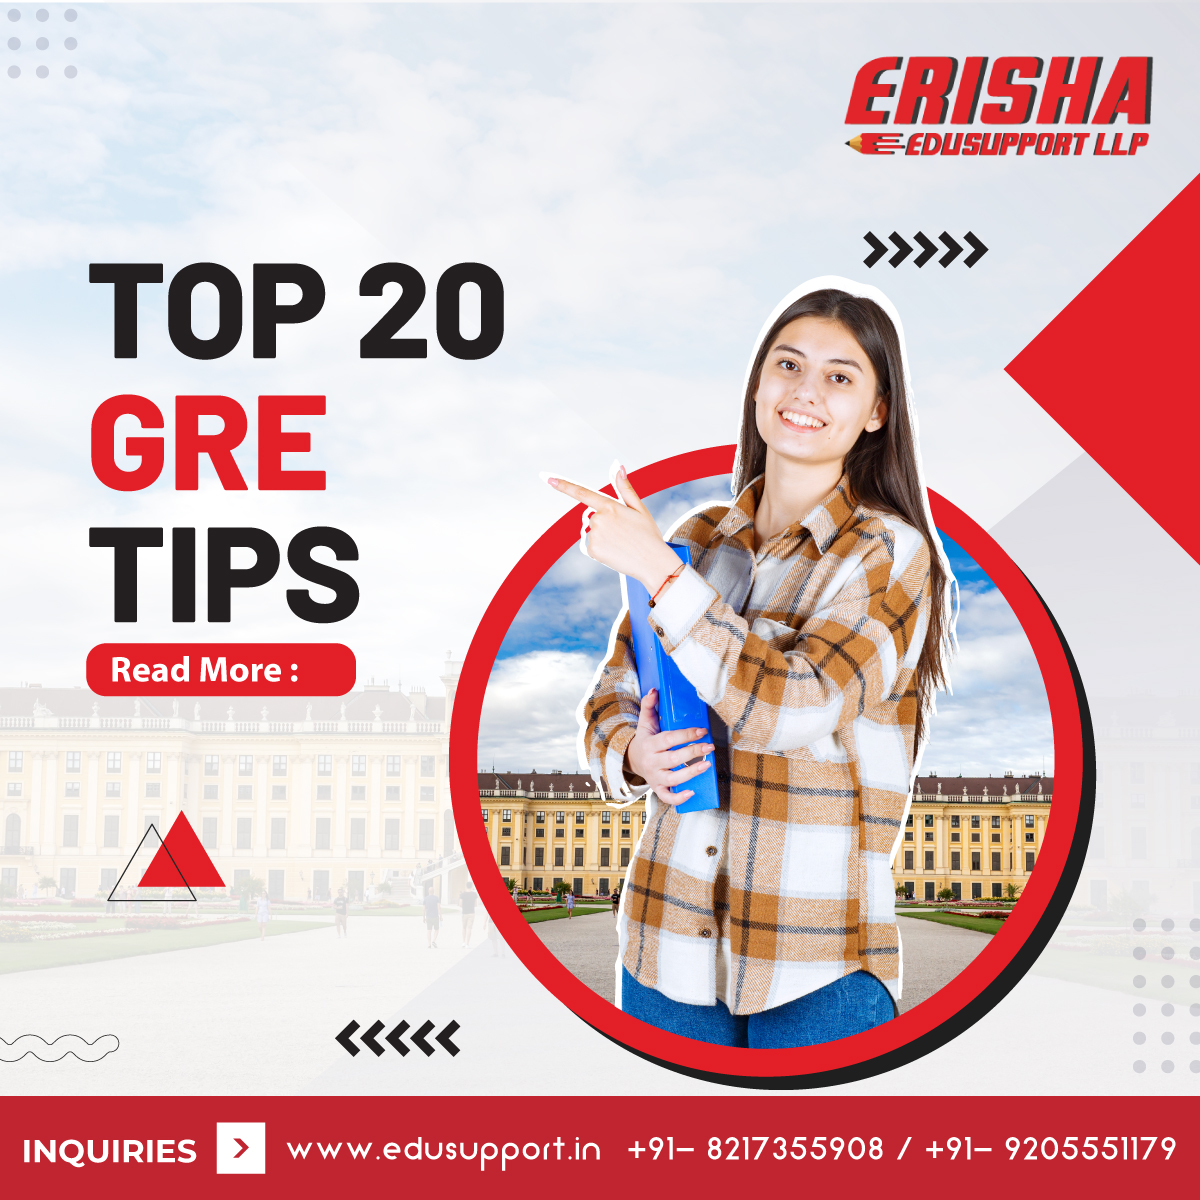 Top 20 GRE Tips